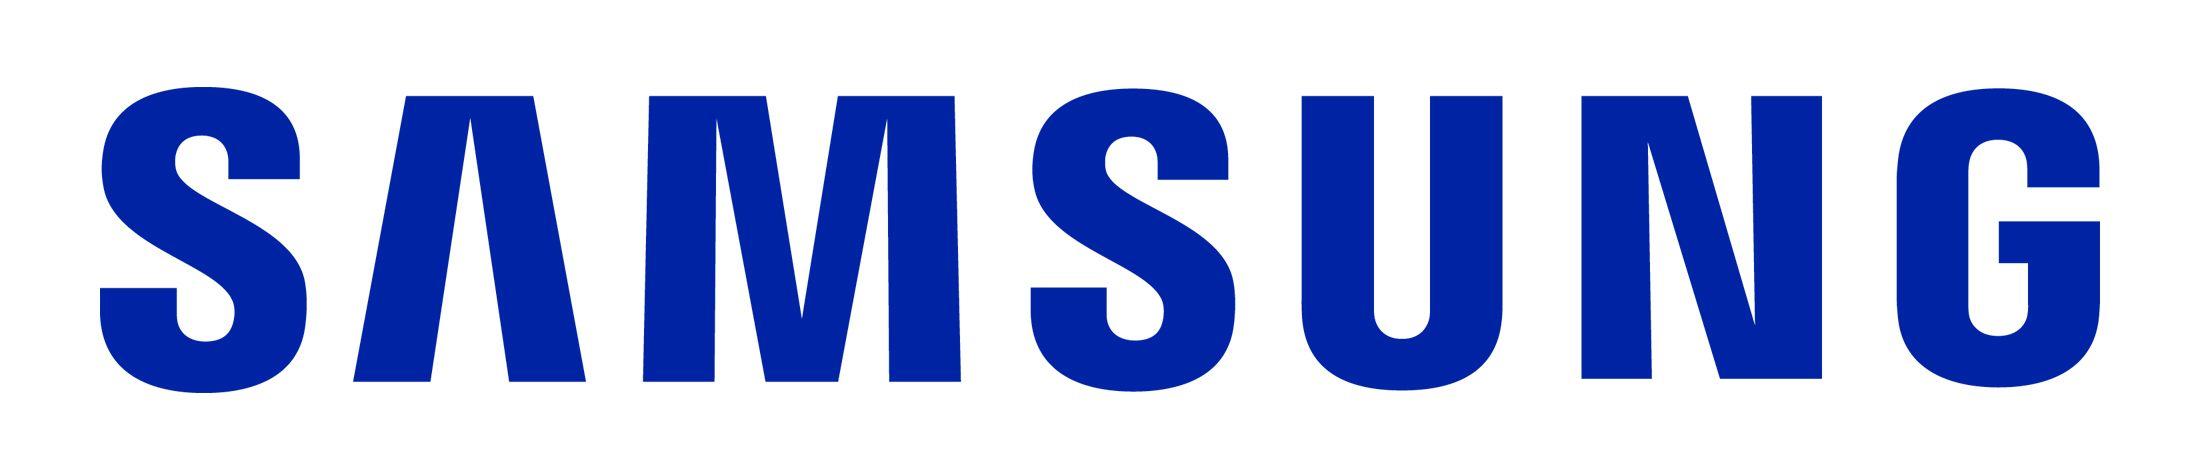 Small Samsung Logo - ADDING MULTIMEDIA Samsung Gear S3 Smartwatch Blends Distinctive ...